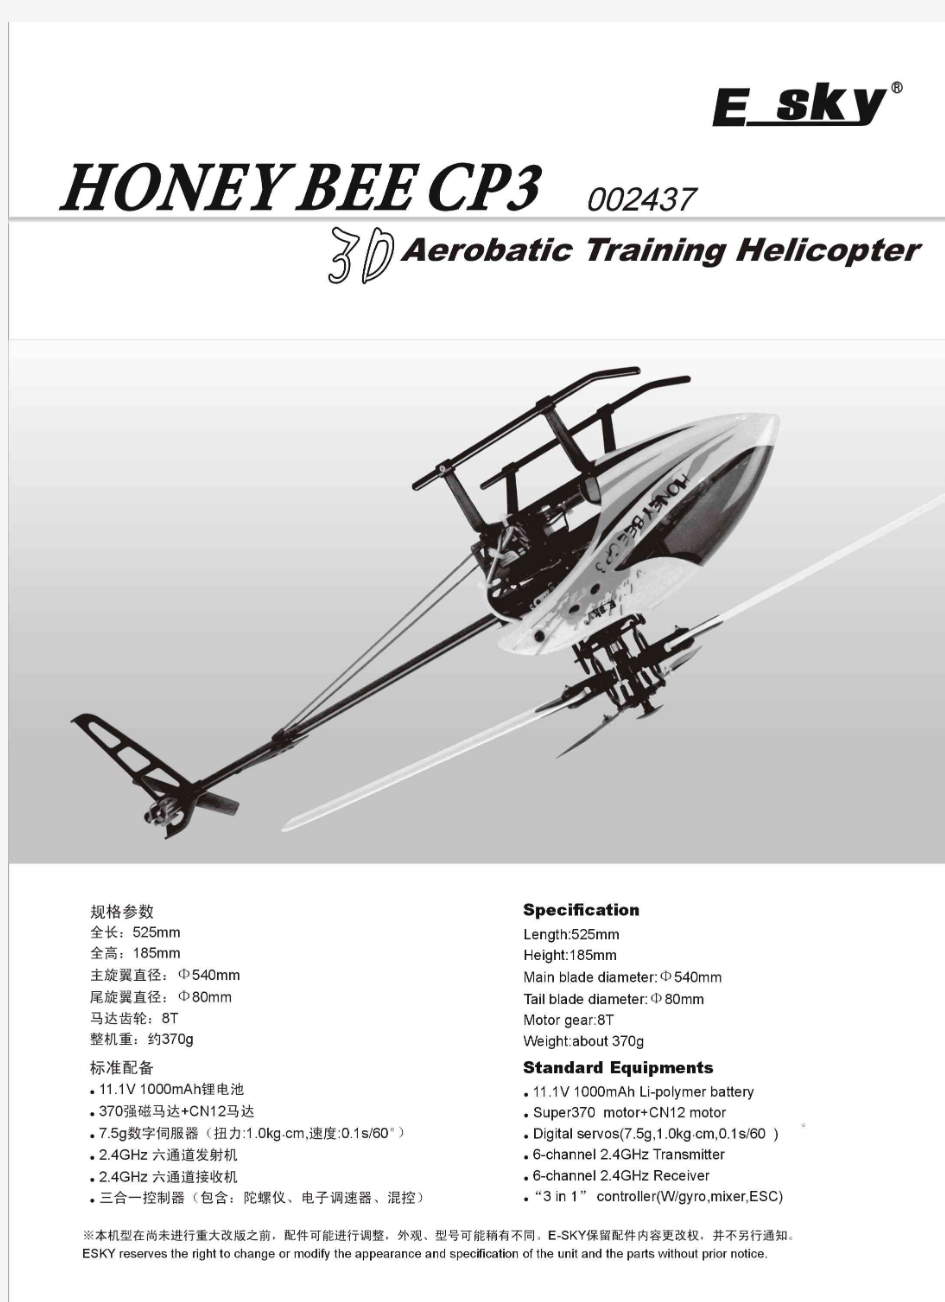 E-sky 2.4GHz Honey Bee CP3遥控直升机操控说明书